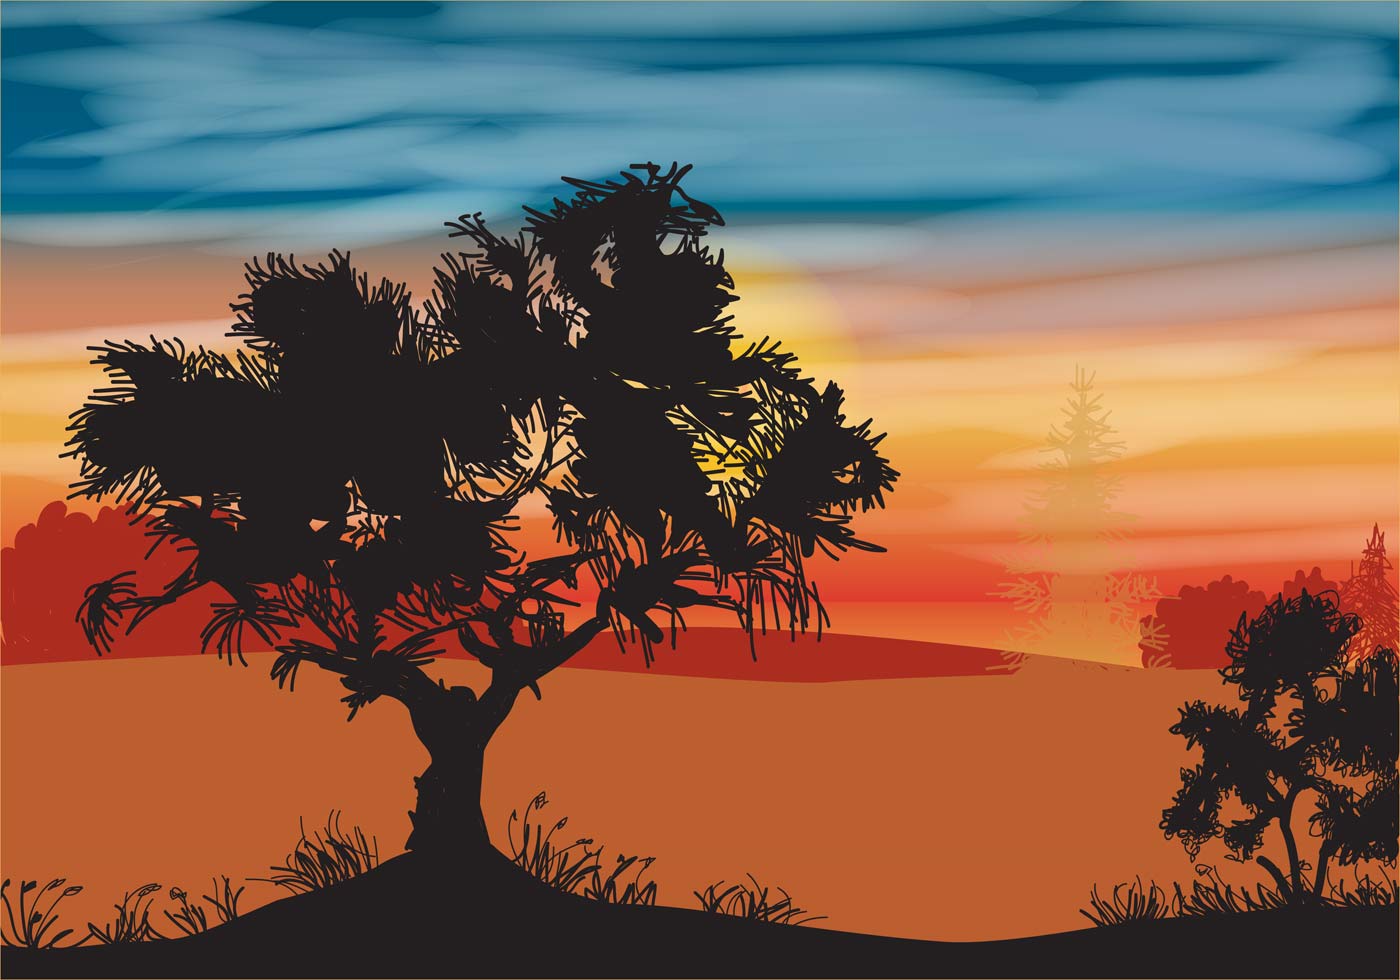 Download Landscape With Oak Tree 92573 - Download Free Vectors ...